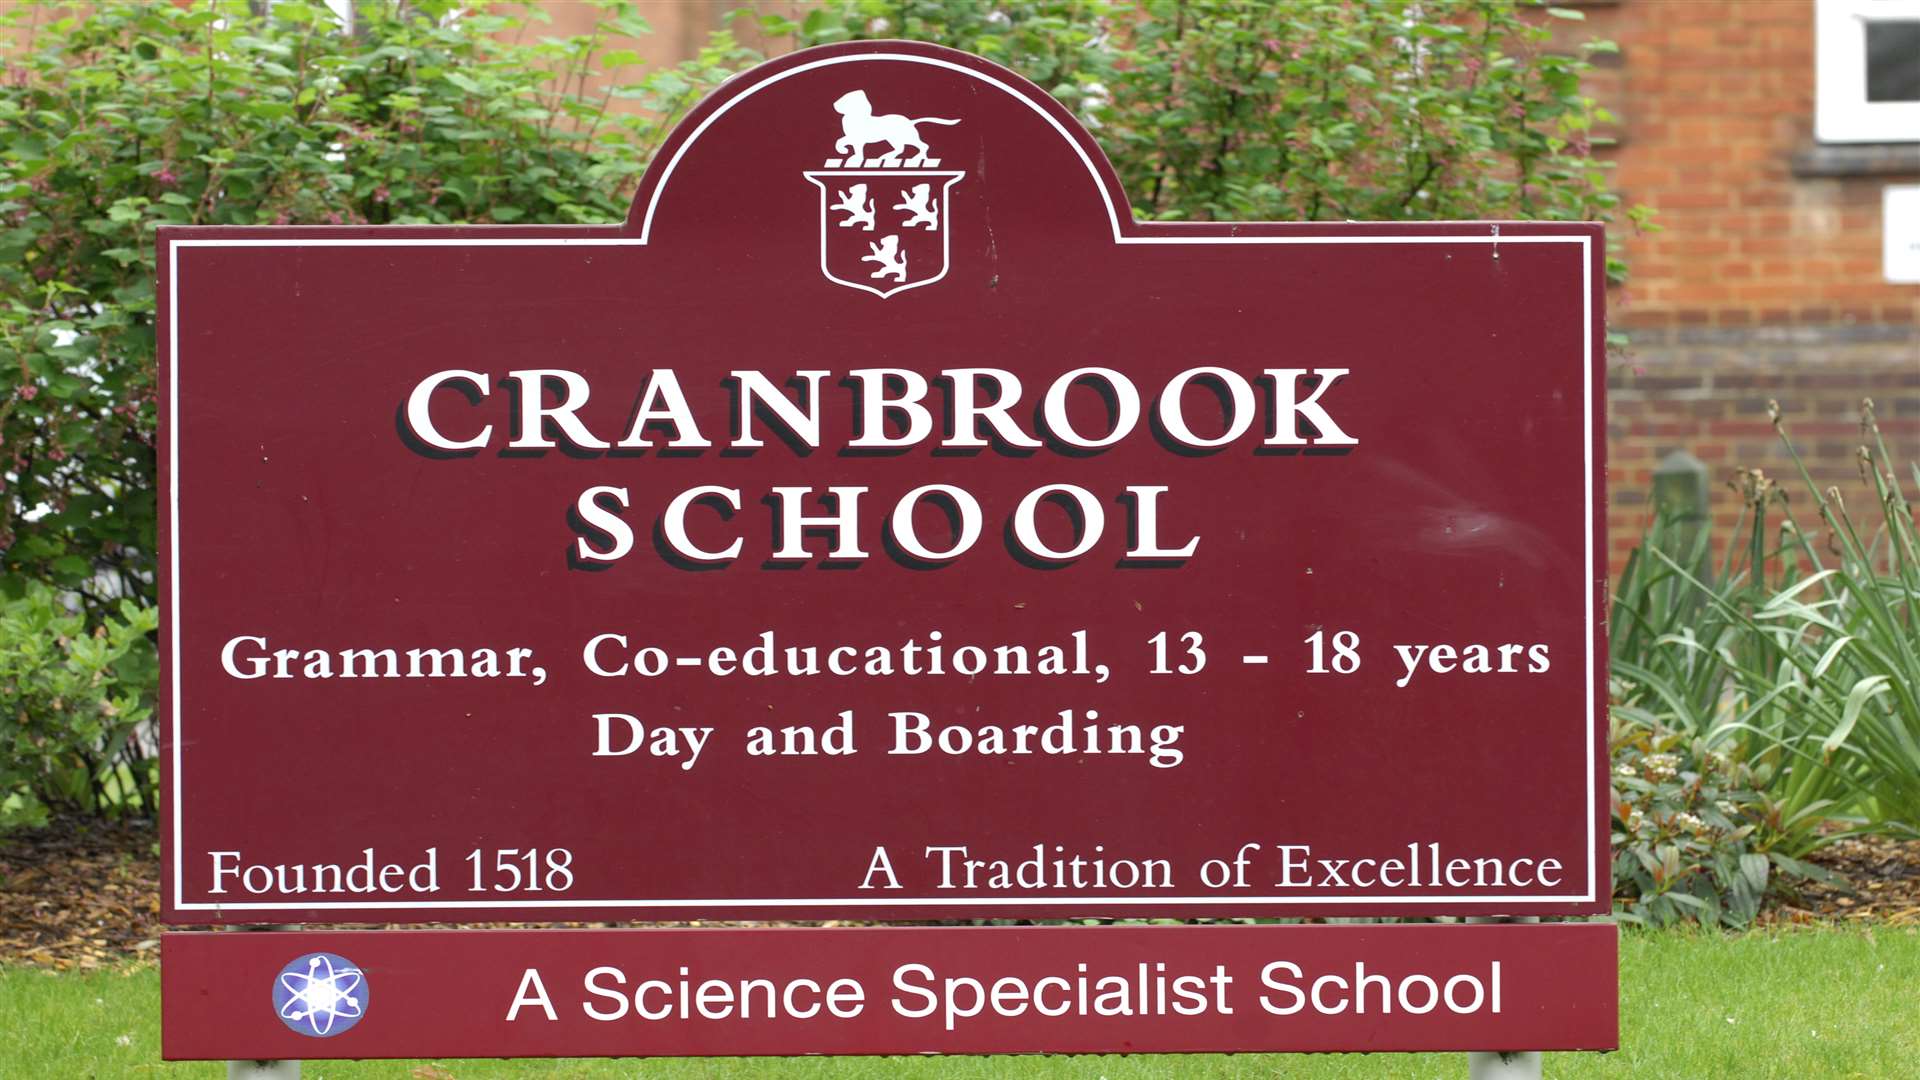 The school sign